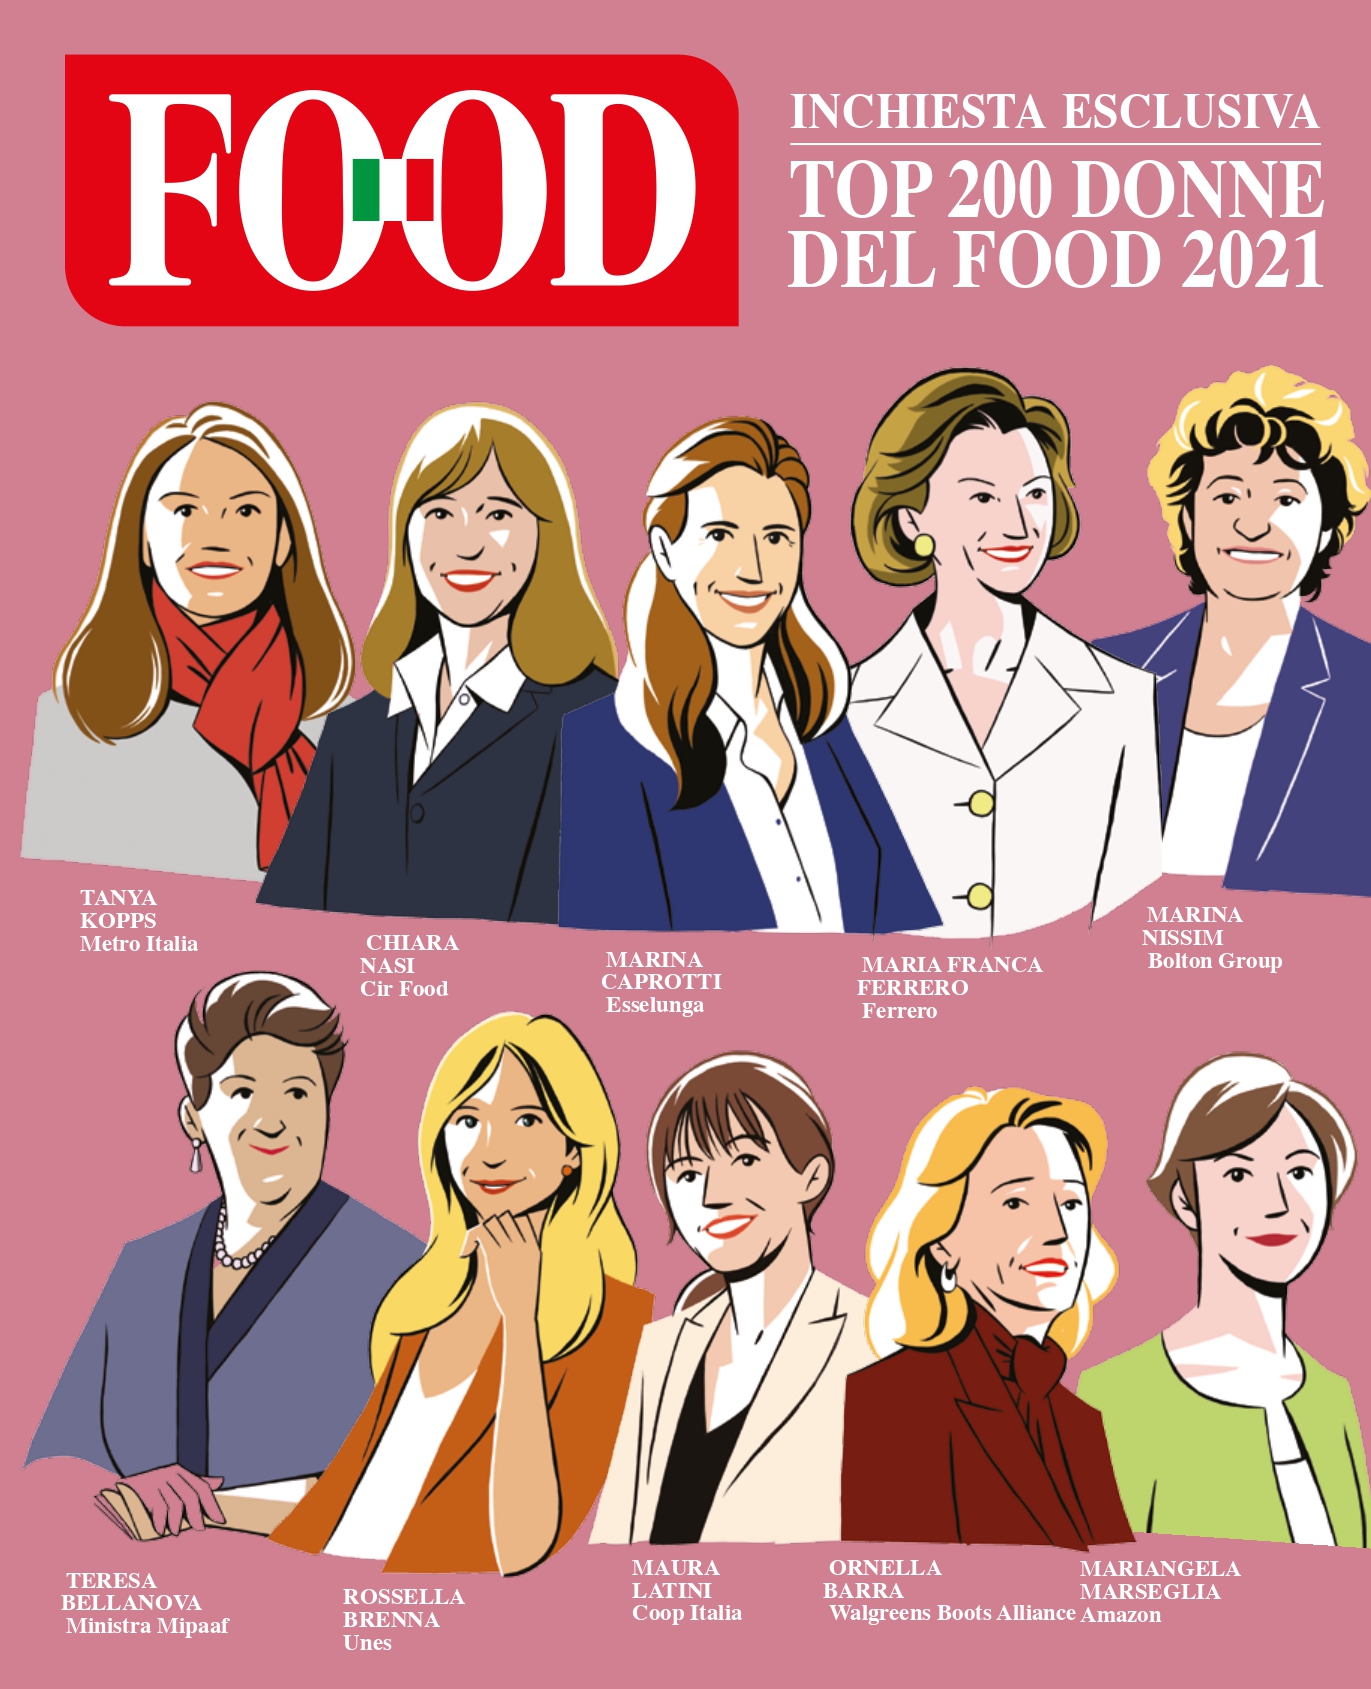 Top 200 Donne del Food